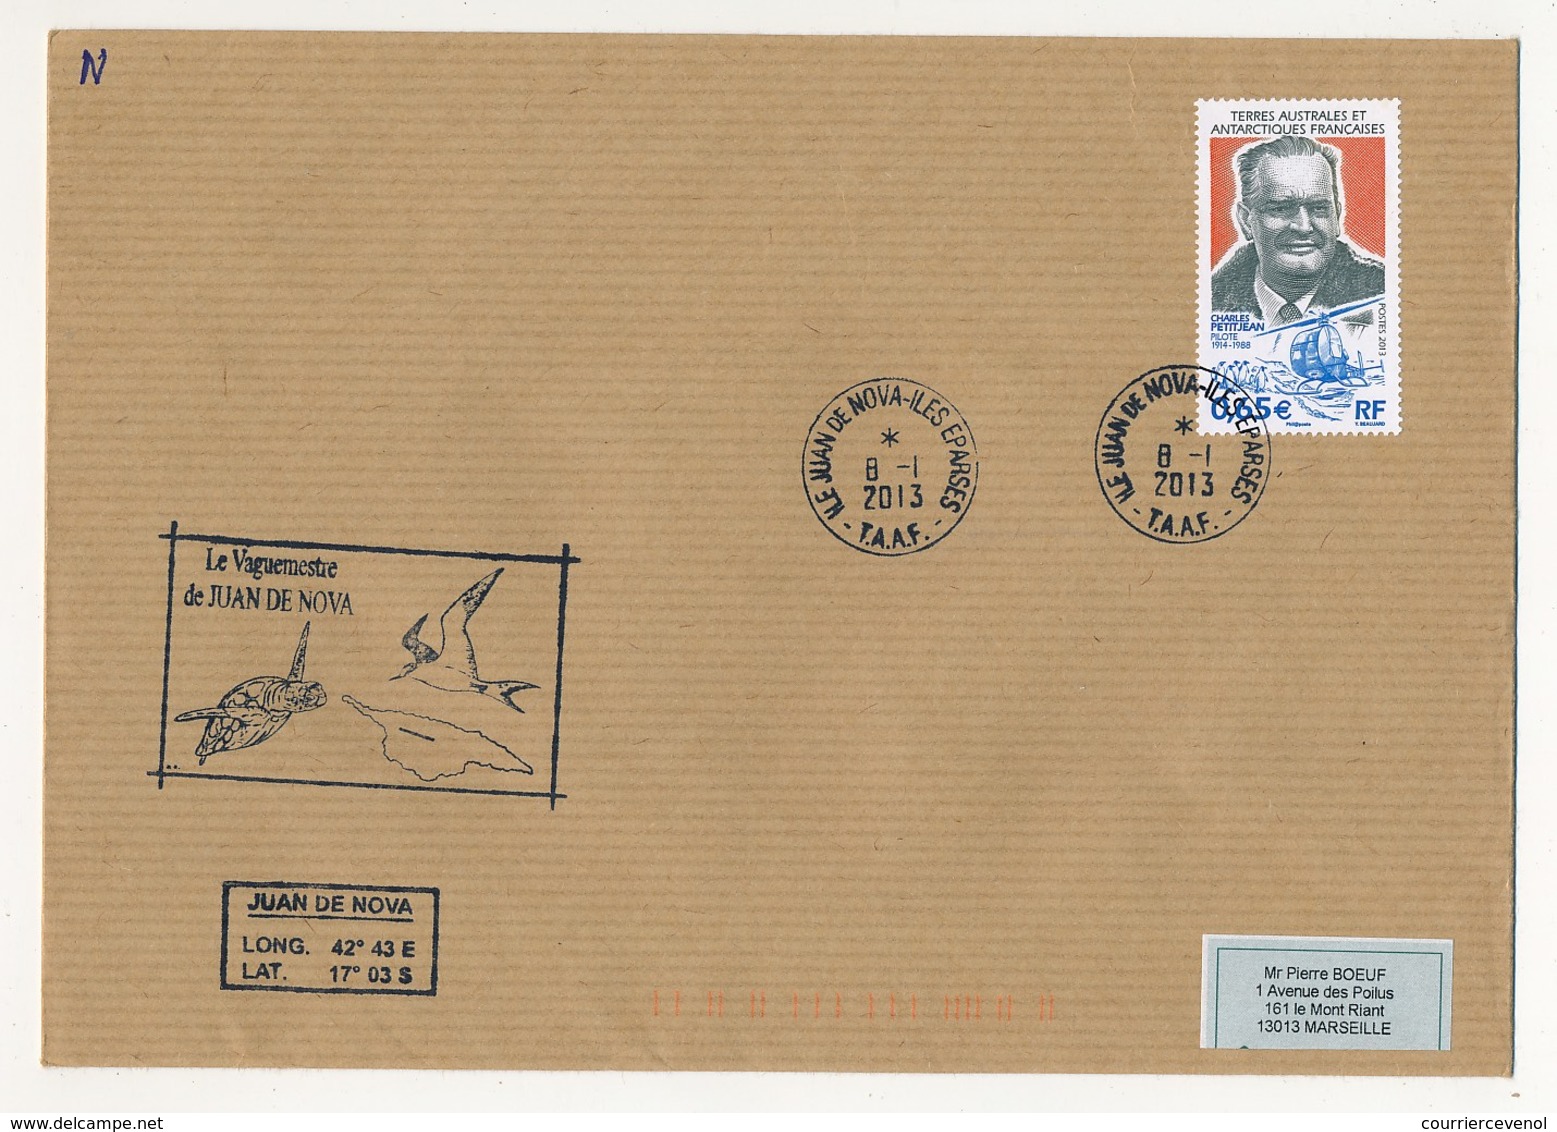 TAAF - Enveloppe Affr. 0,65E Charles Petitjean - Ile Juan De Nova - Iles Eparses 8-1-2013 + Cachet Vaguemestre - Briefe U. Dokumente